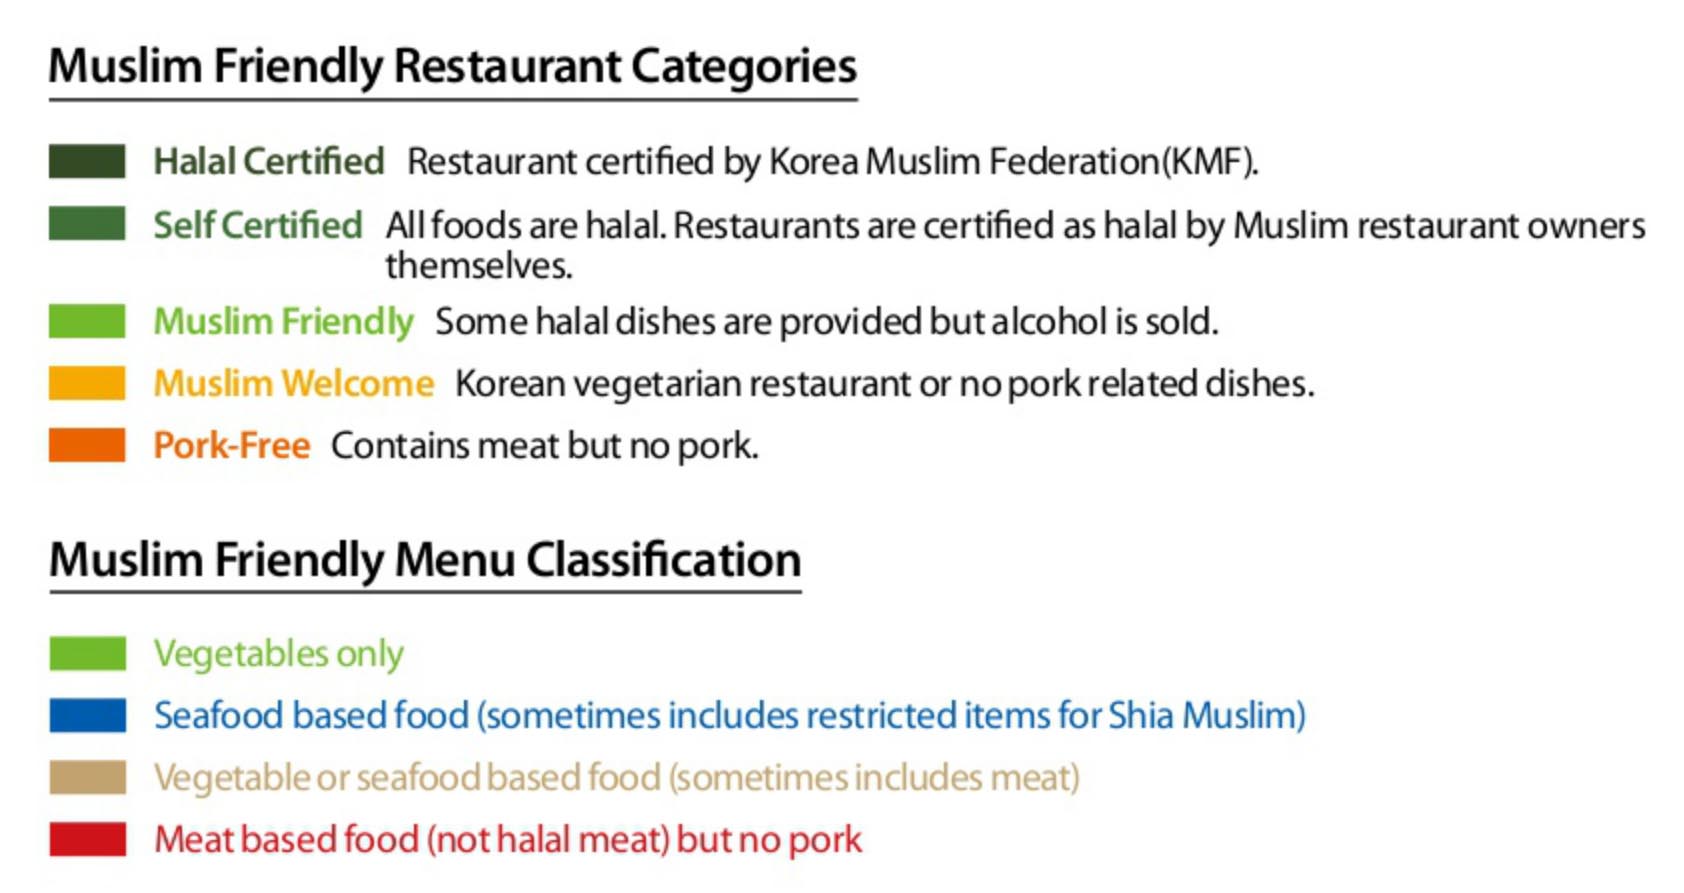 Muslim Friendly Restaurant Categories in Korea